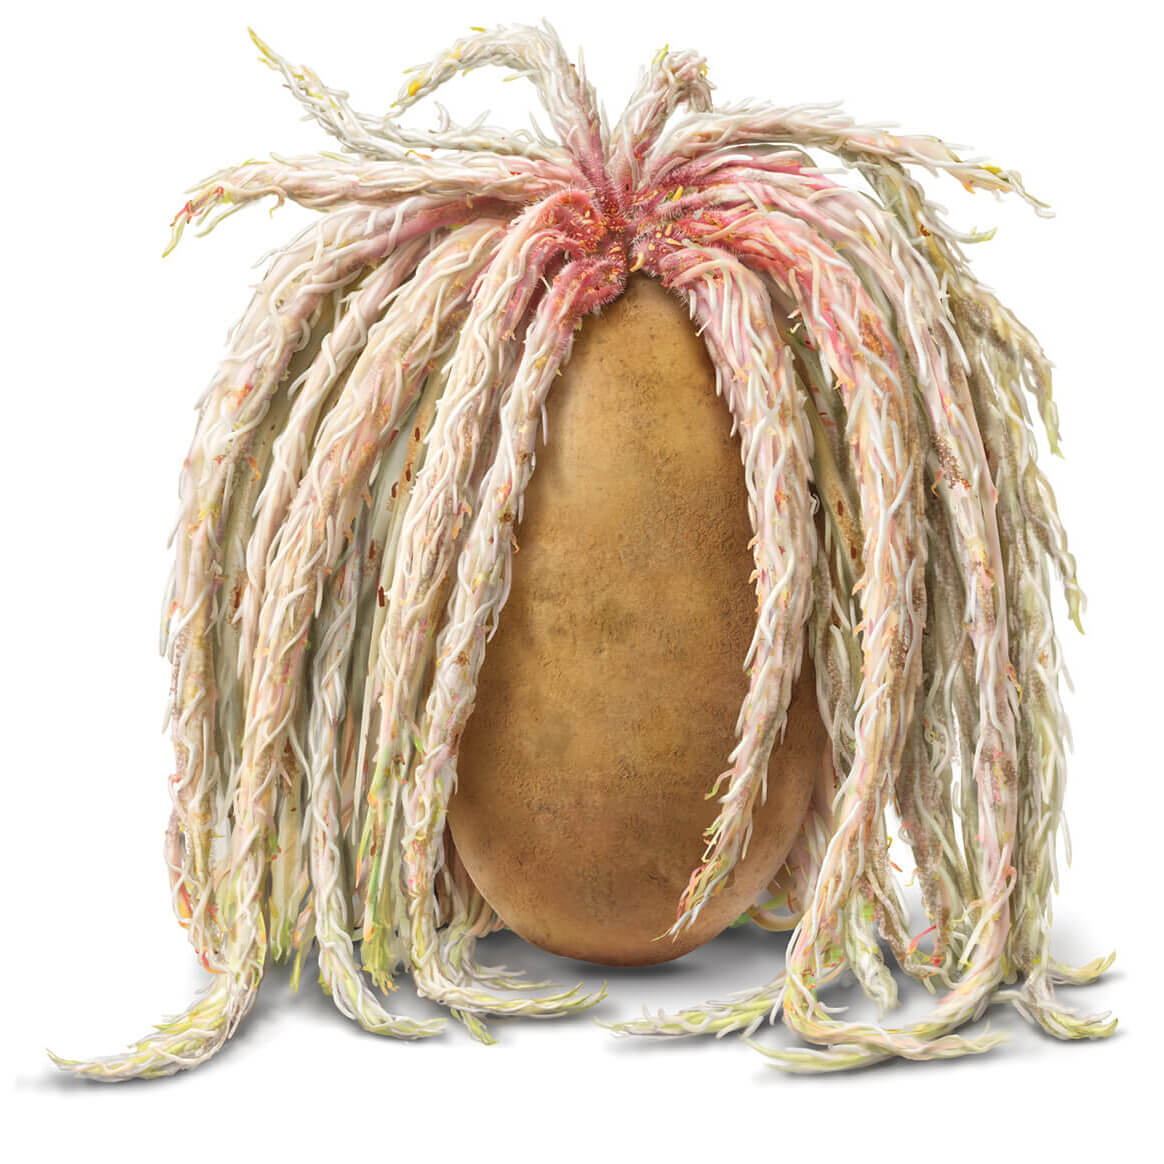 Amvac Smartblock, illustrations of a potato with roots shaped as dreadlocks hairdo